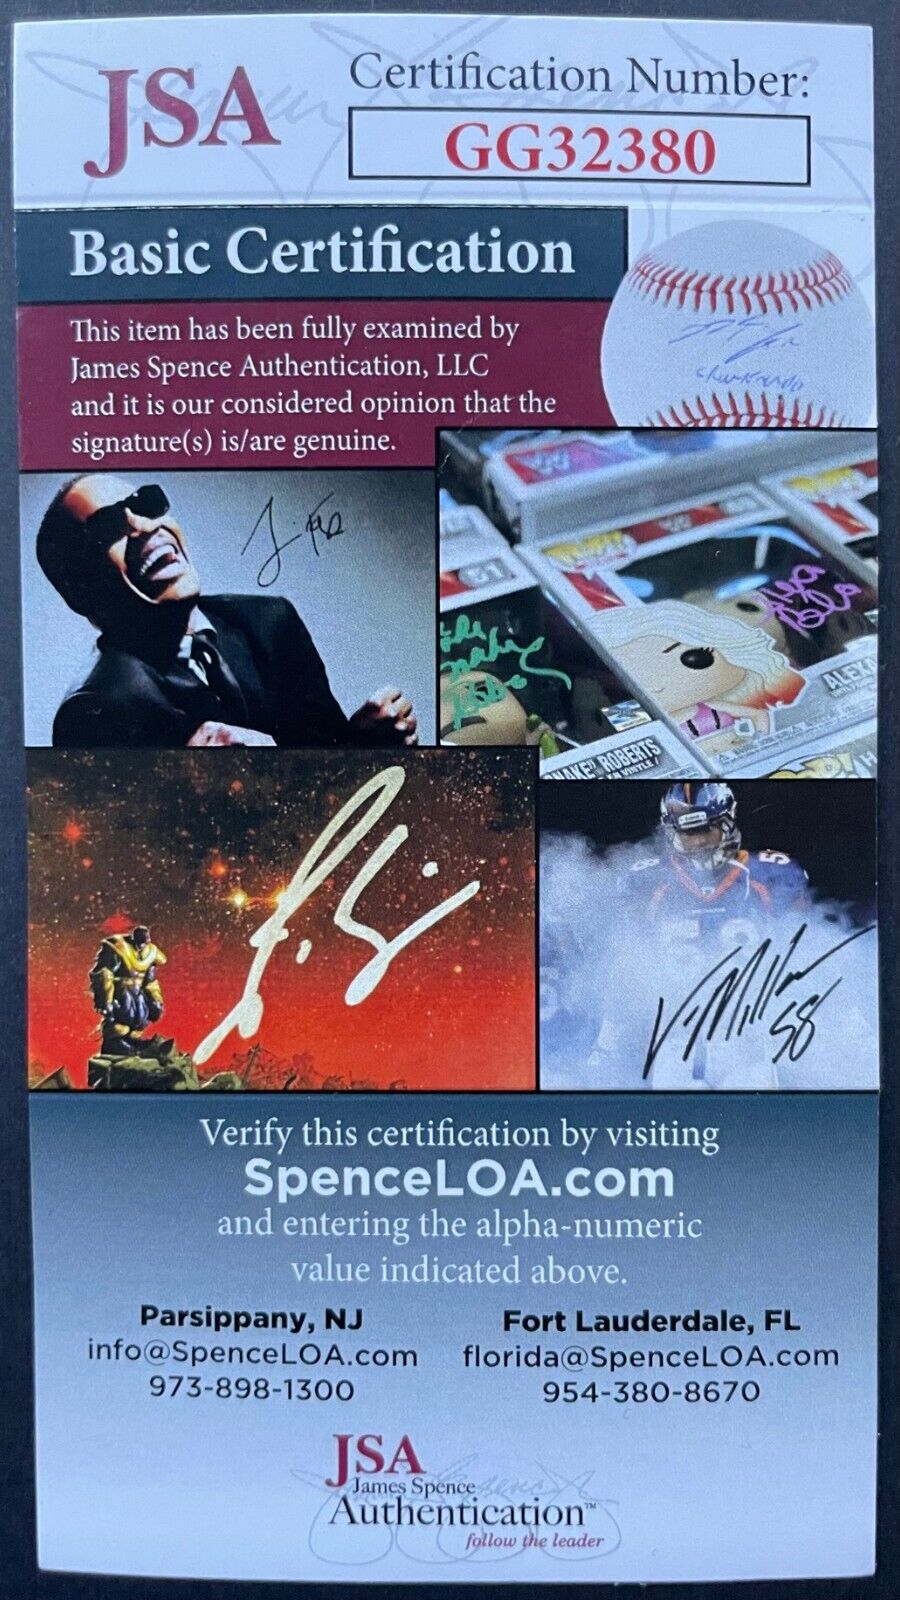 Lanny McDonald Autographed Colorado Rockies Jersey JSA COA Signed